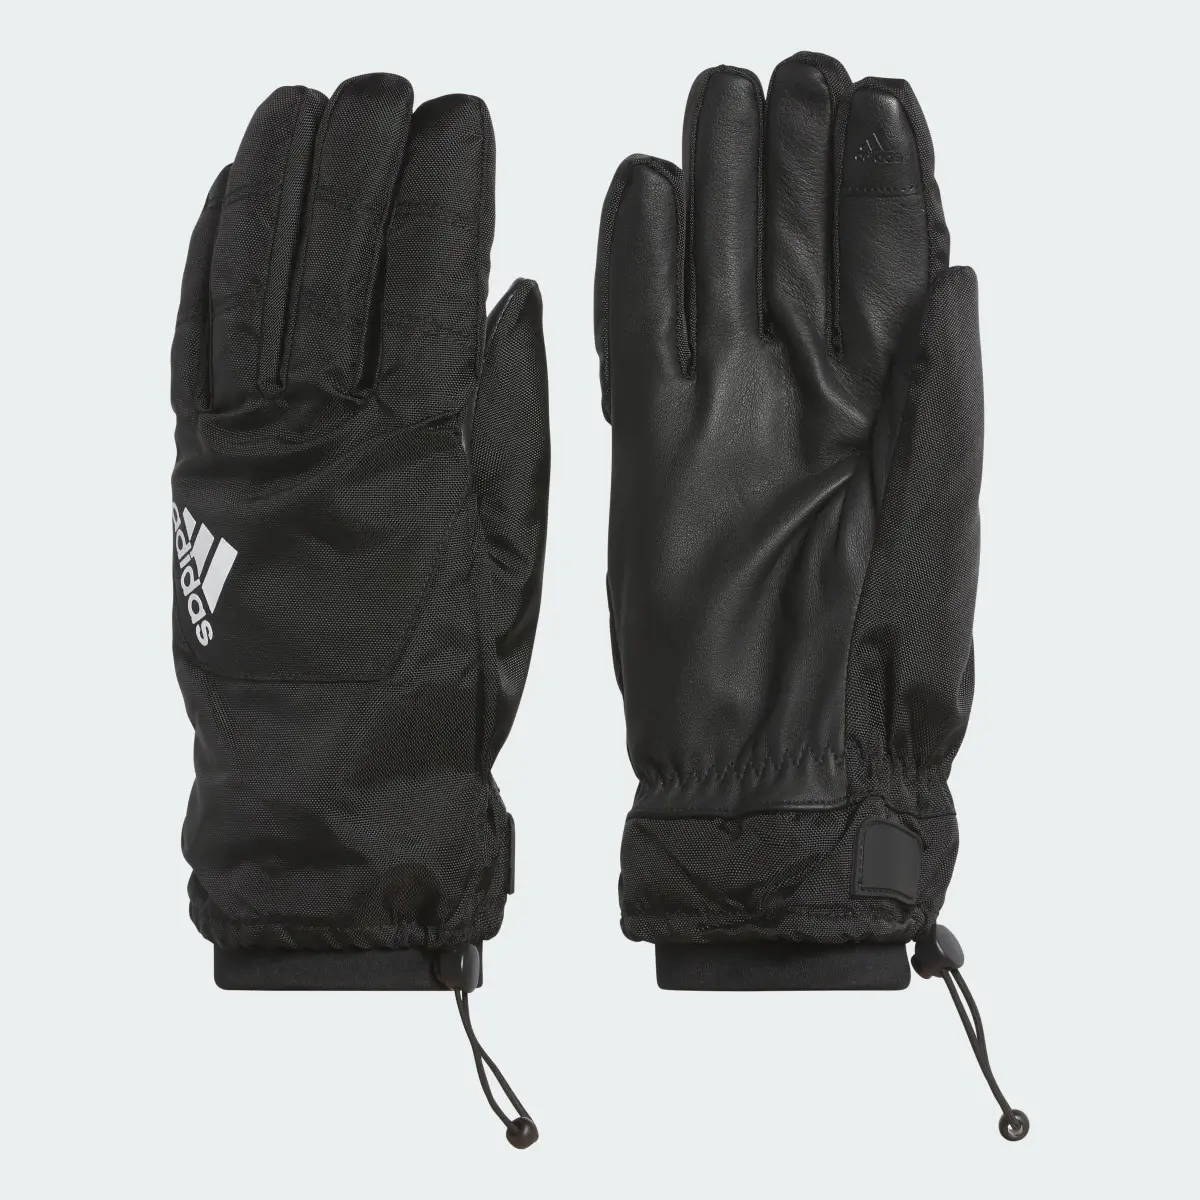 Adidas Teber Gloves. 2